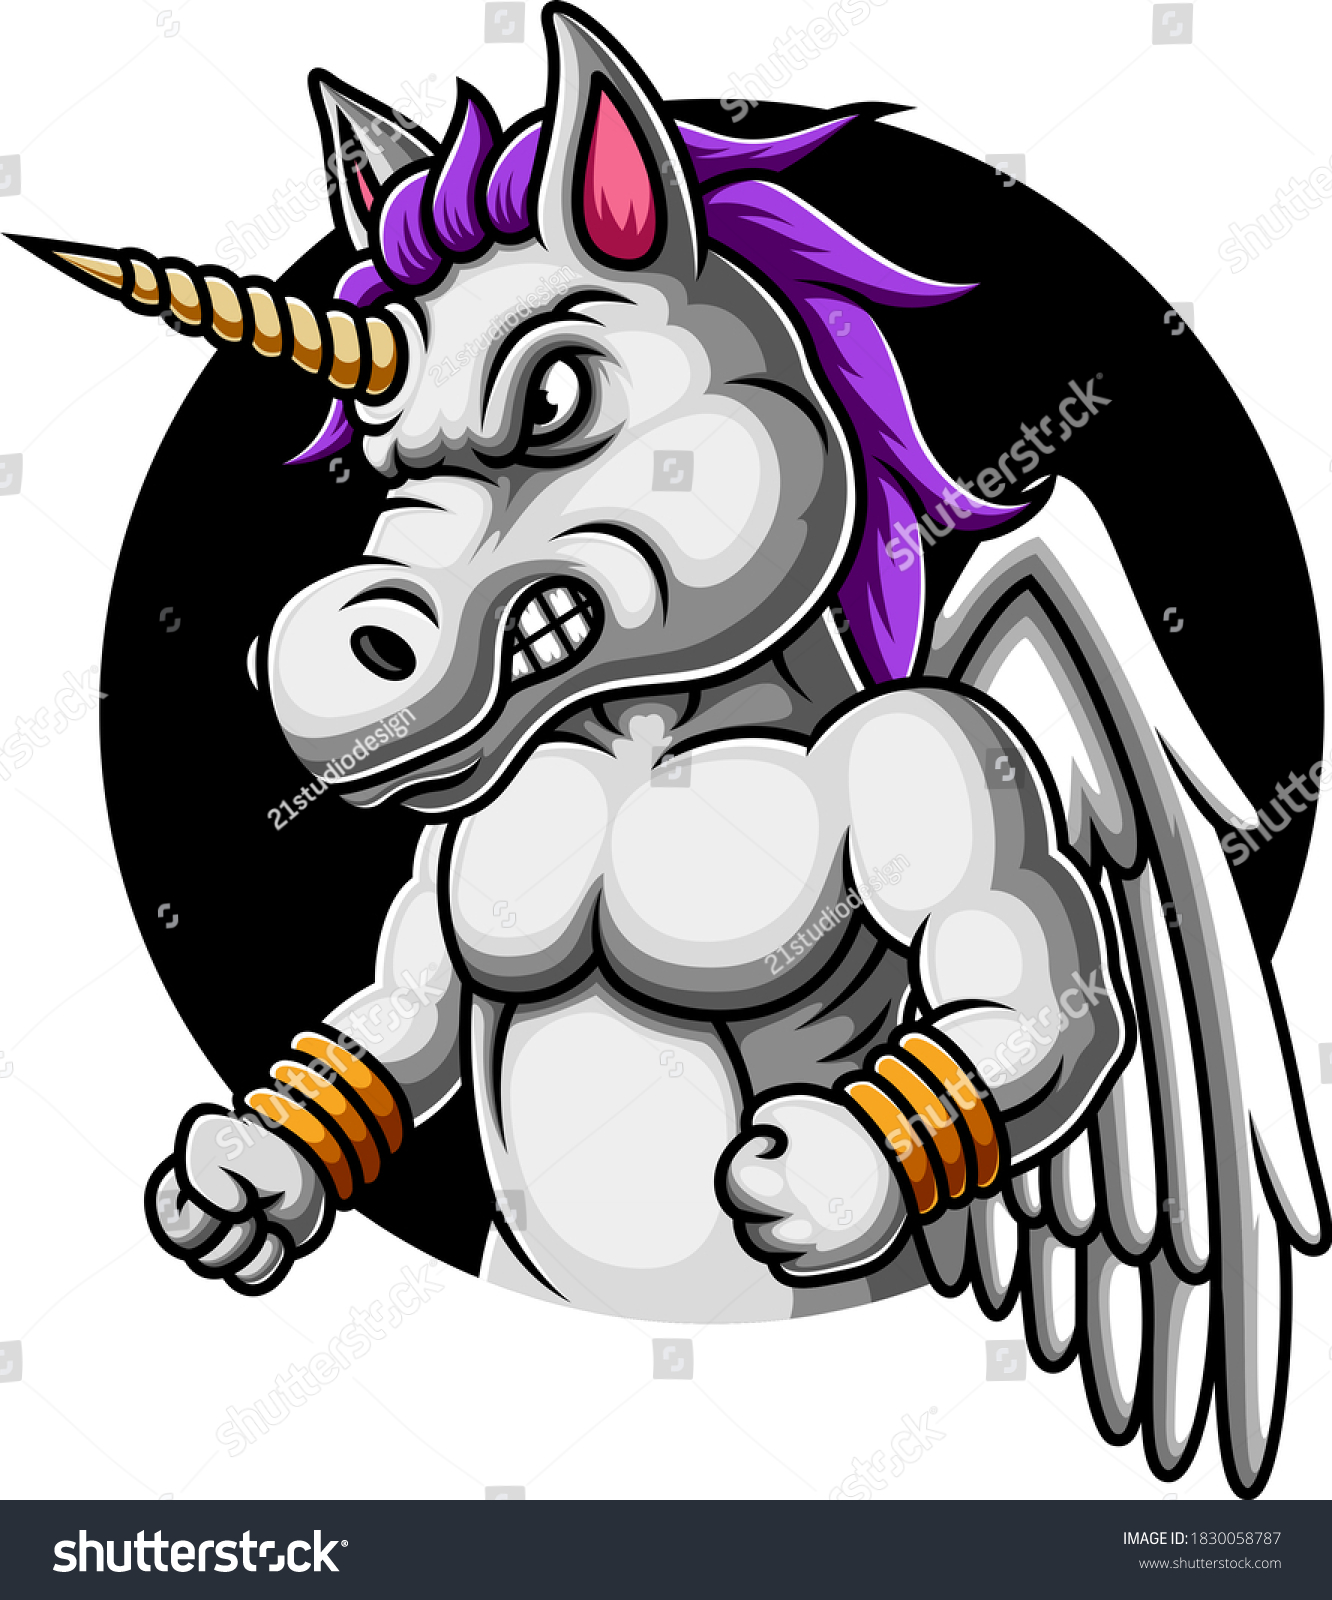 SVG of Angry Unicorn mascot logo design of illustration svg